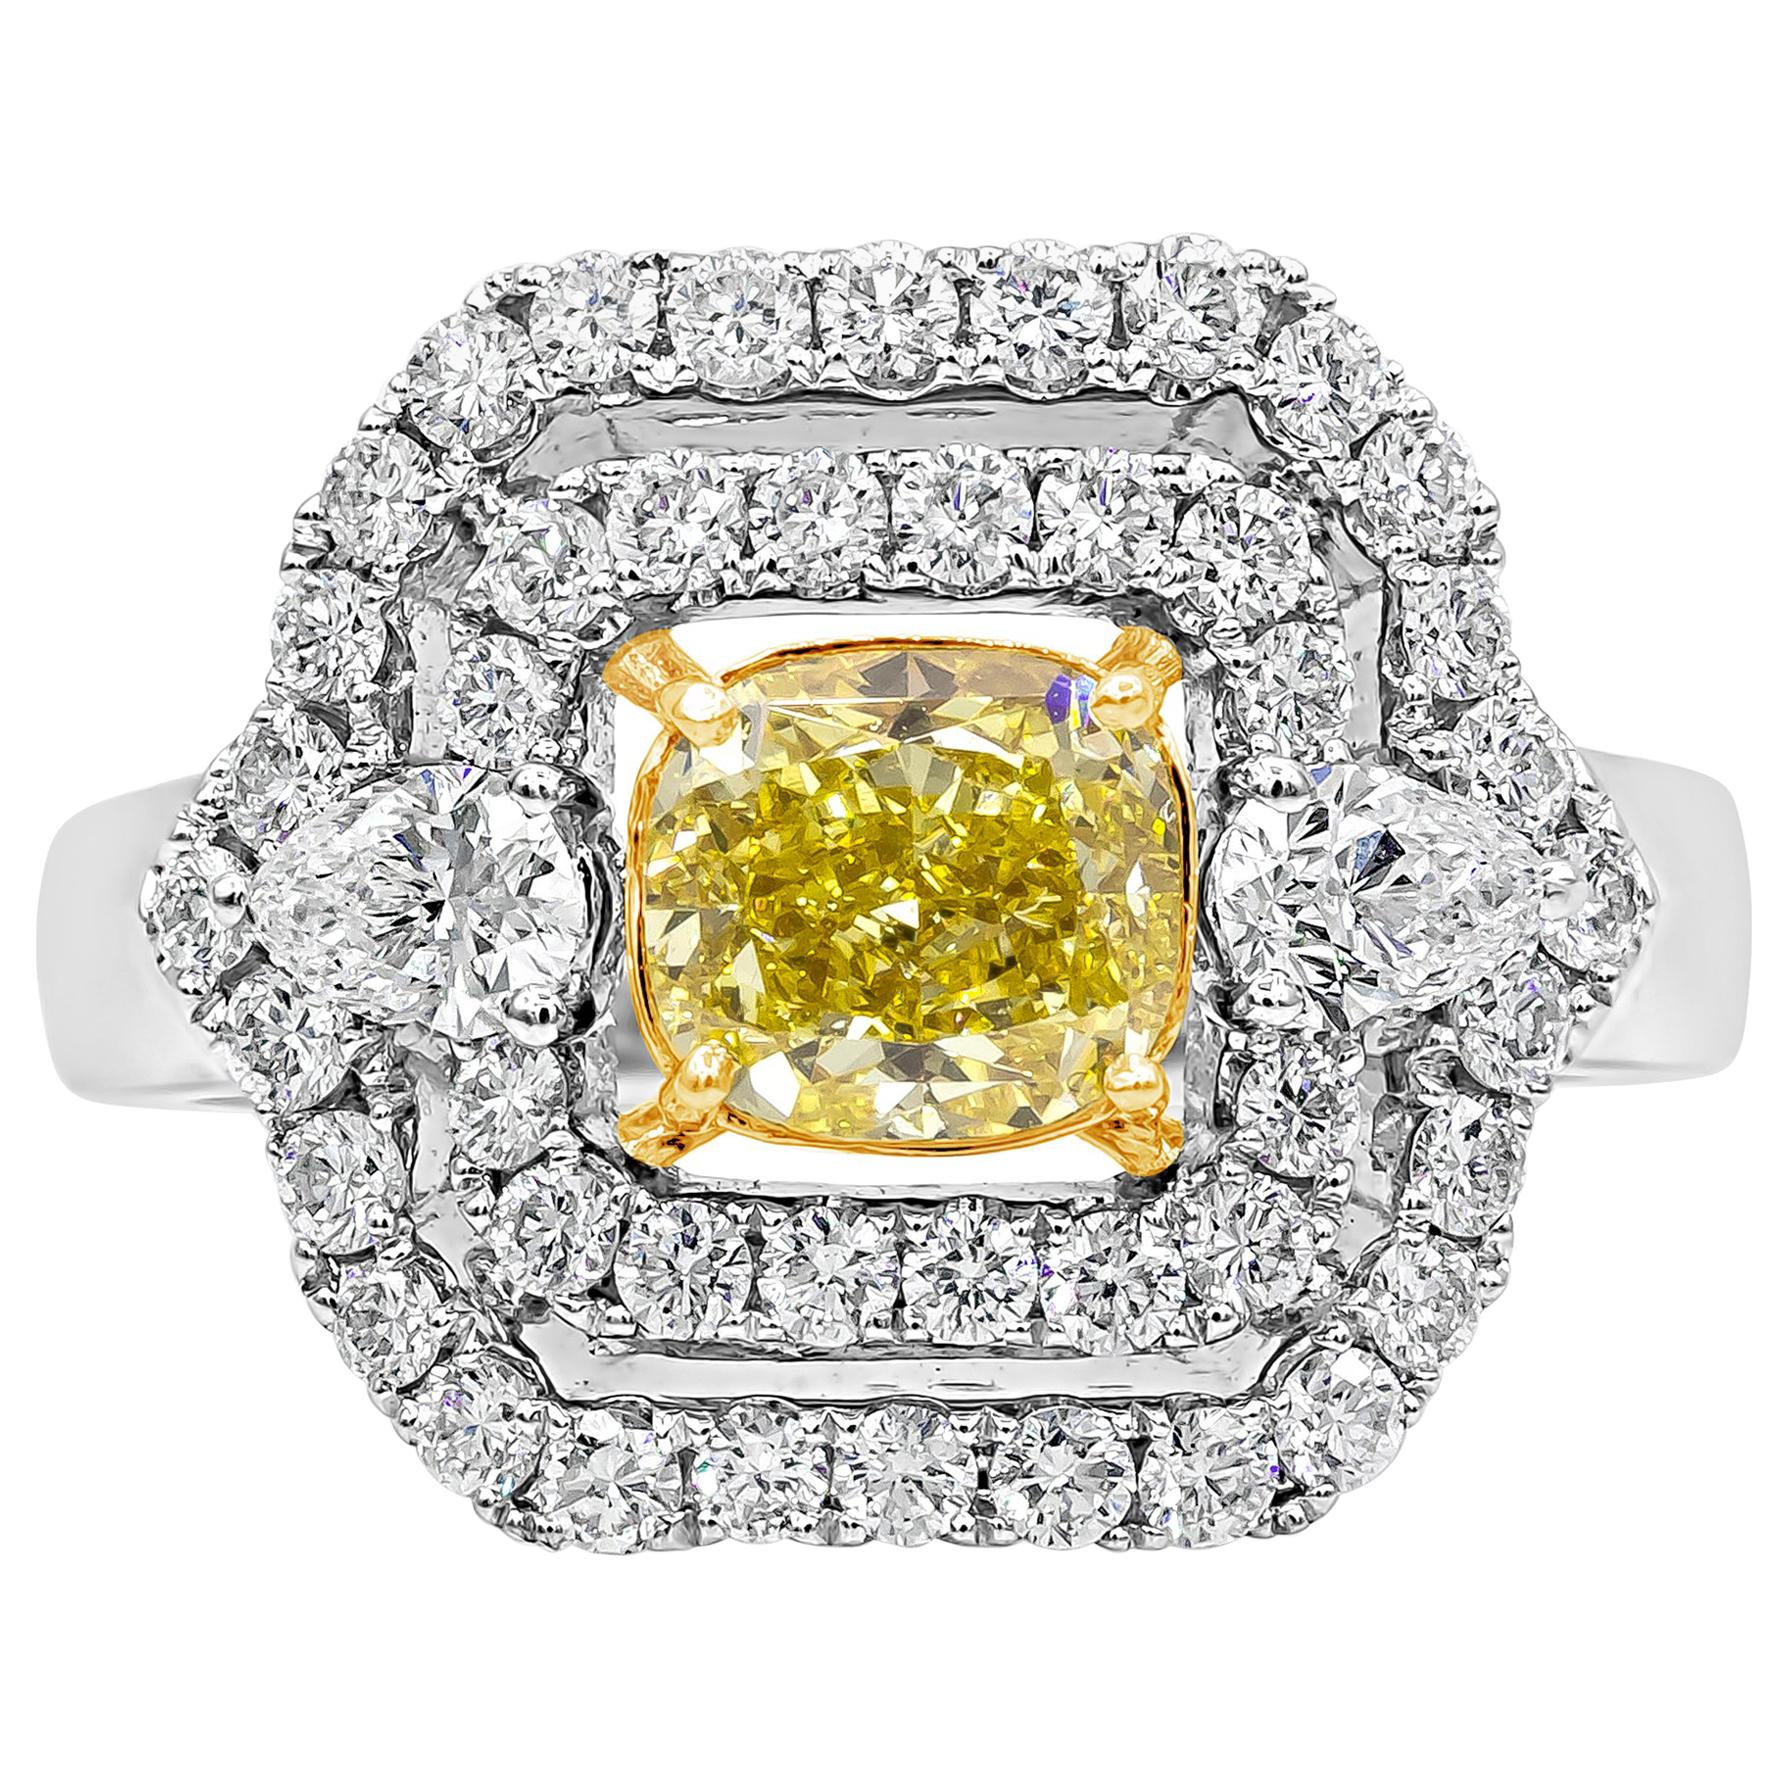 1.32 Carats Cushion Cut Intense Yellow Diamond Three-Stone Halo Engagement Ring